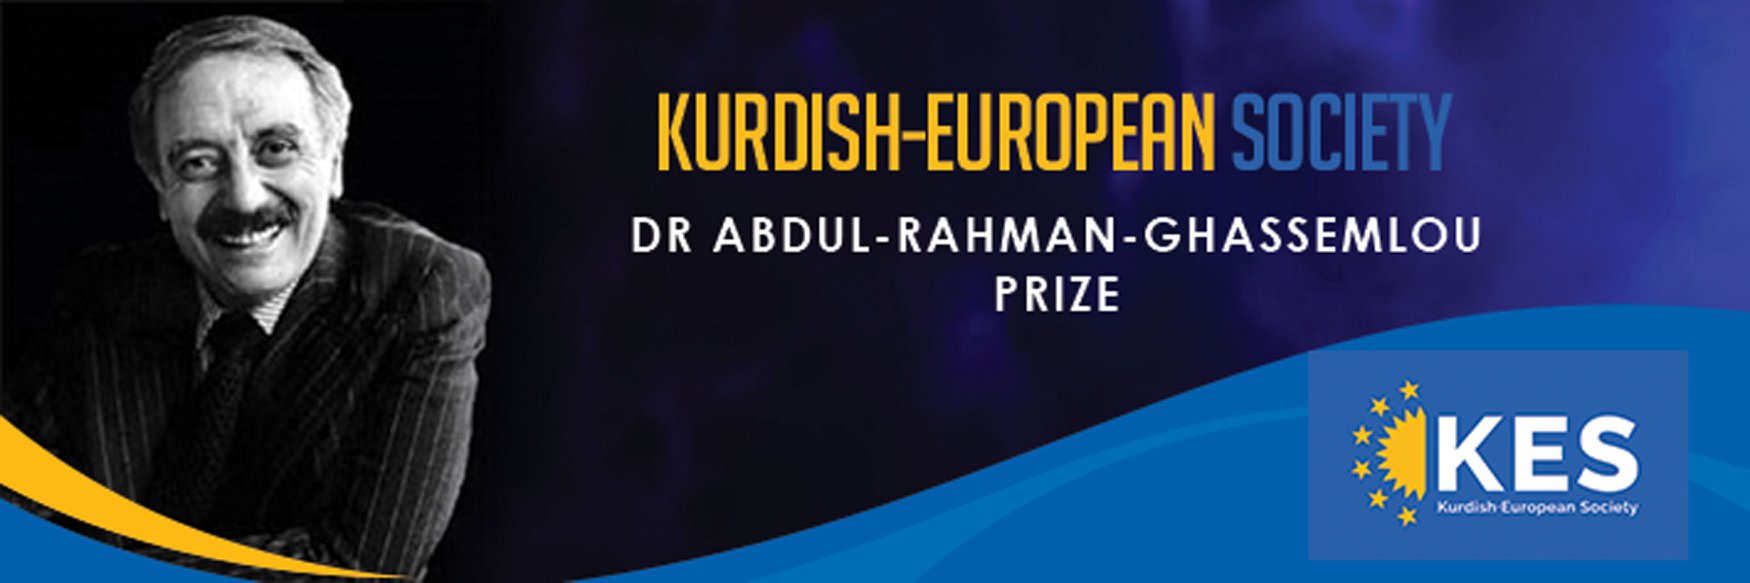 Dr. Abdul Rahman Ghassemlou Prize Banner